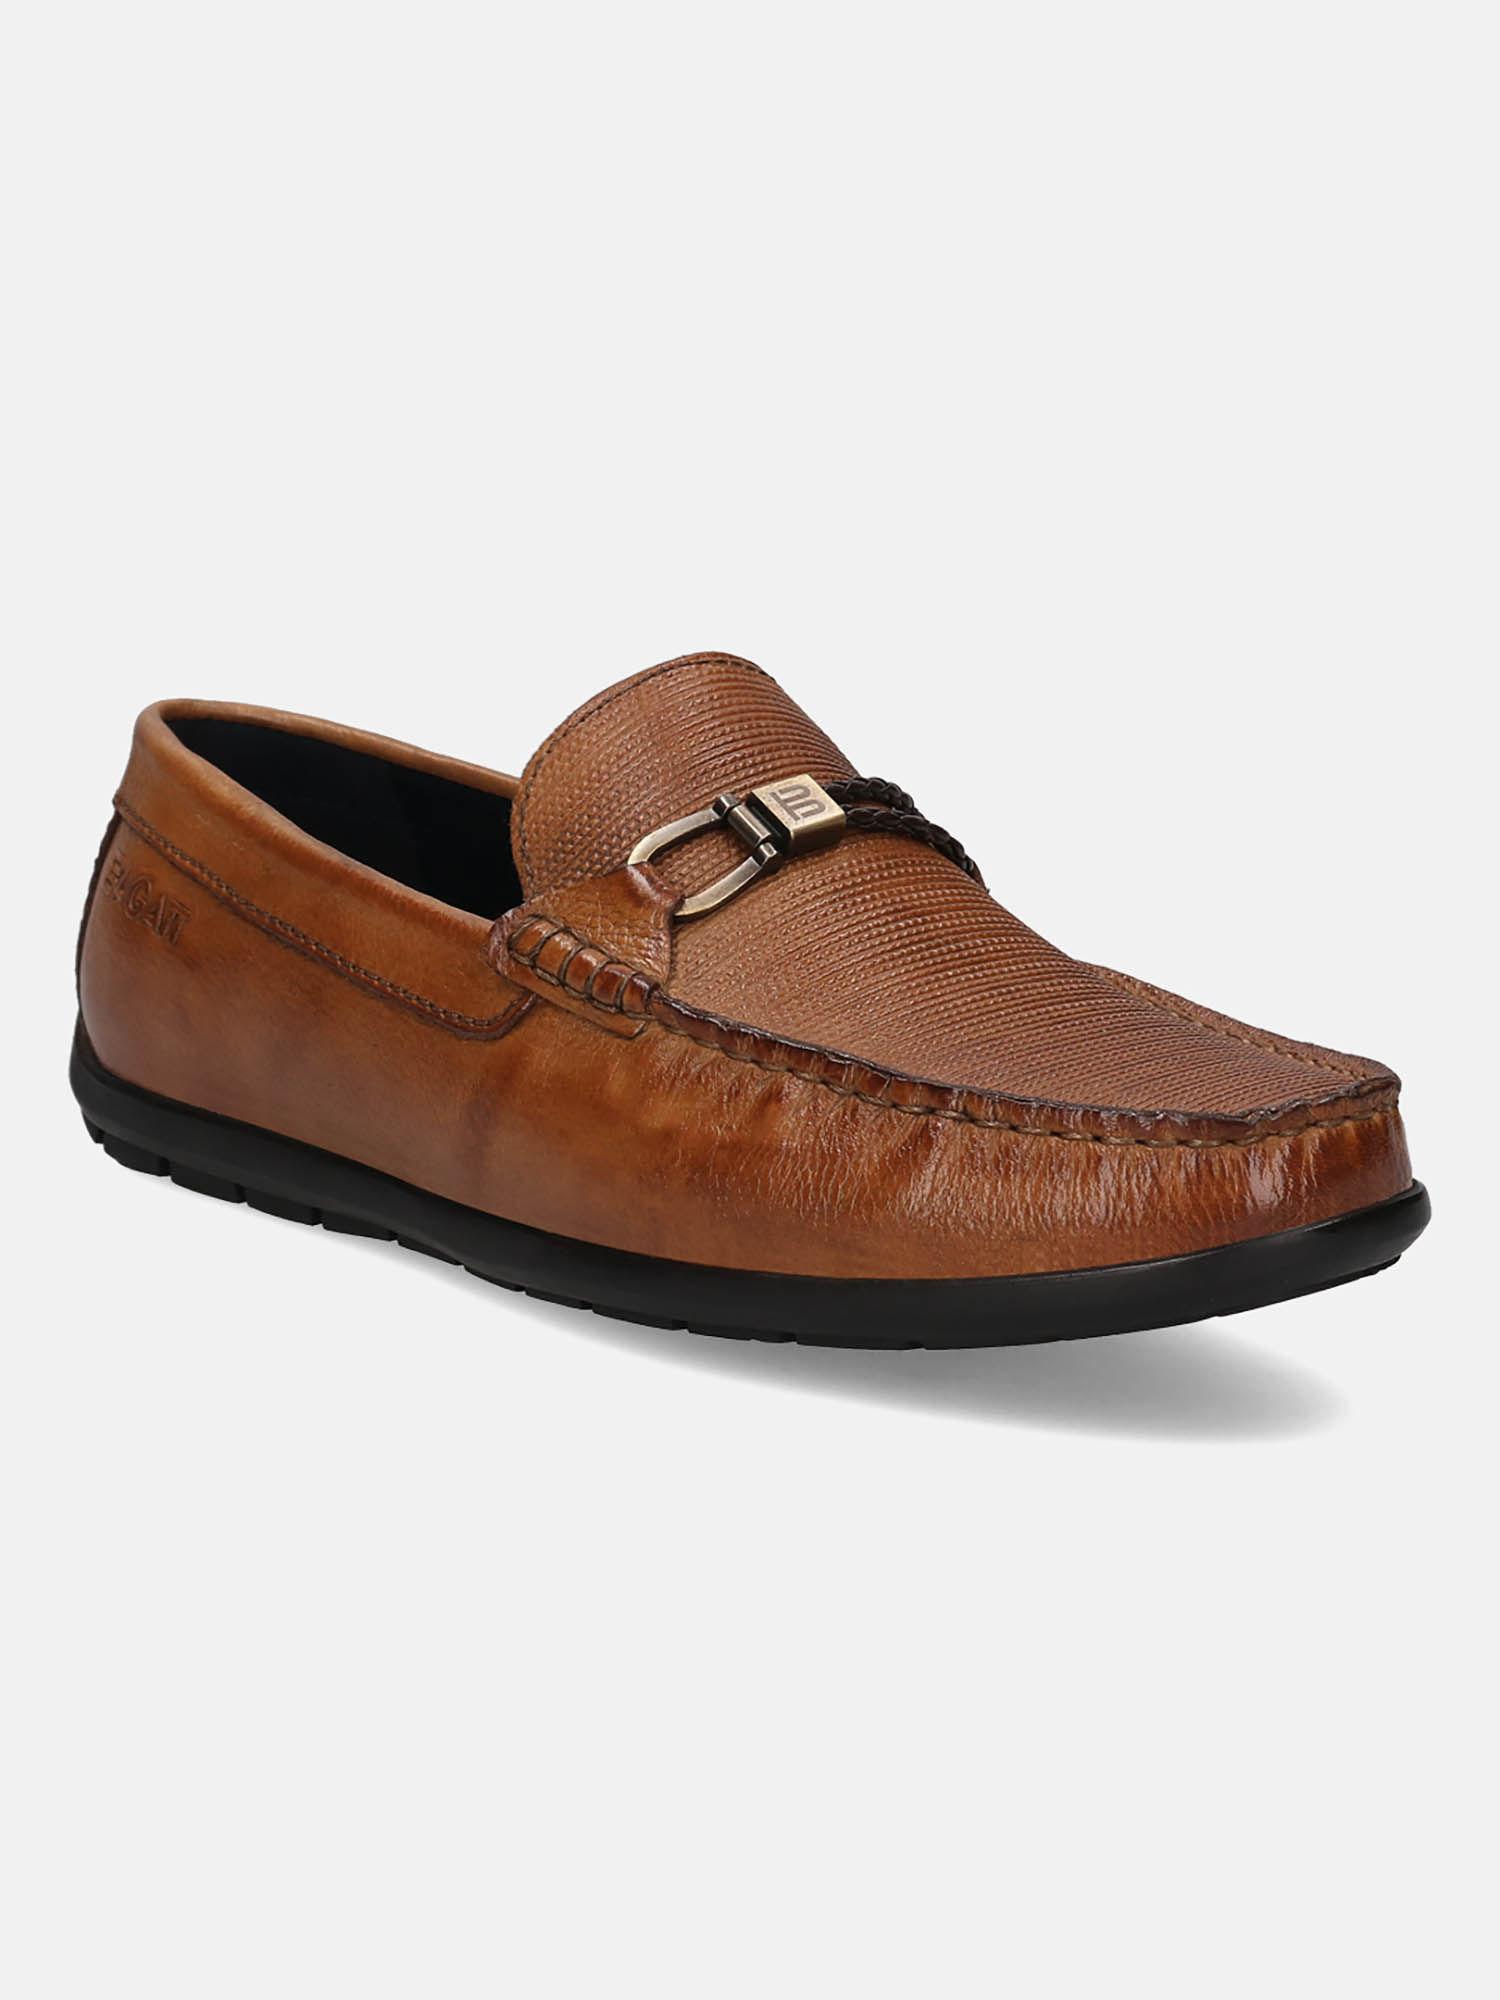 xline men cognac leather casual loafers slip-on